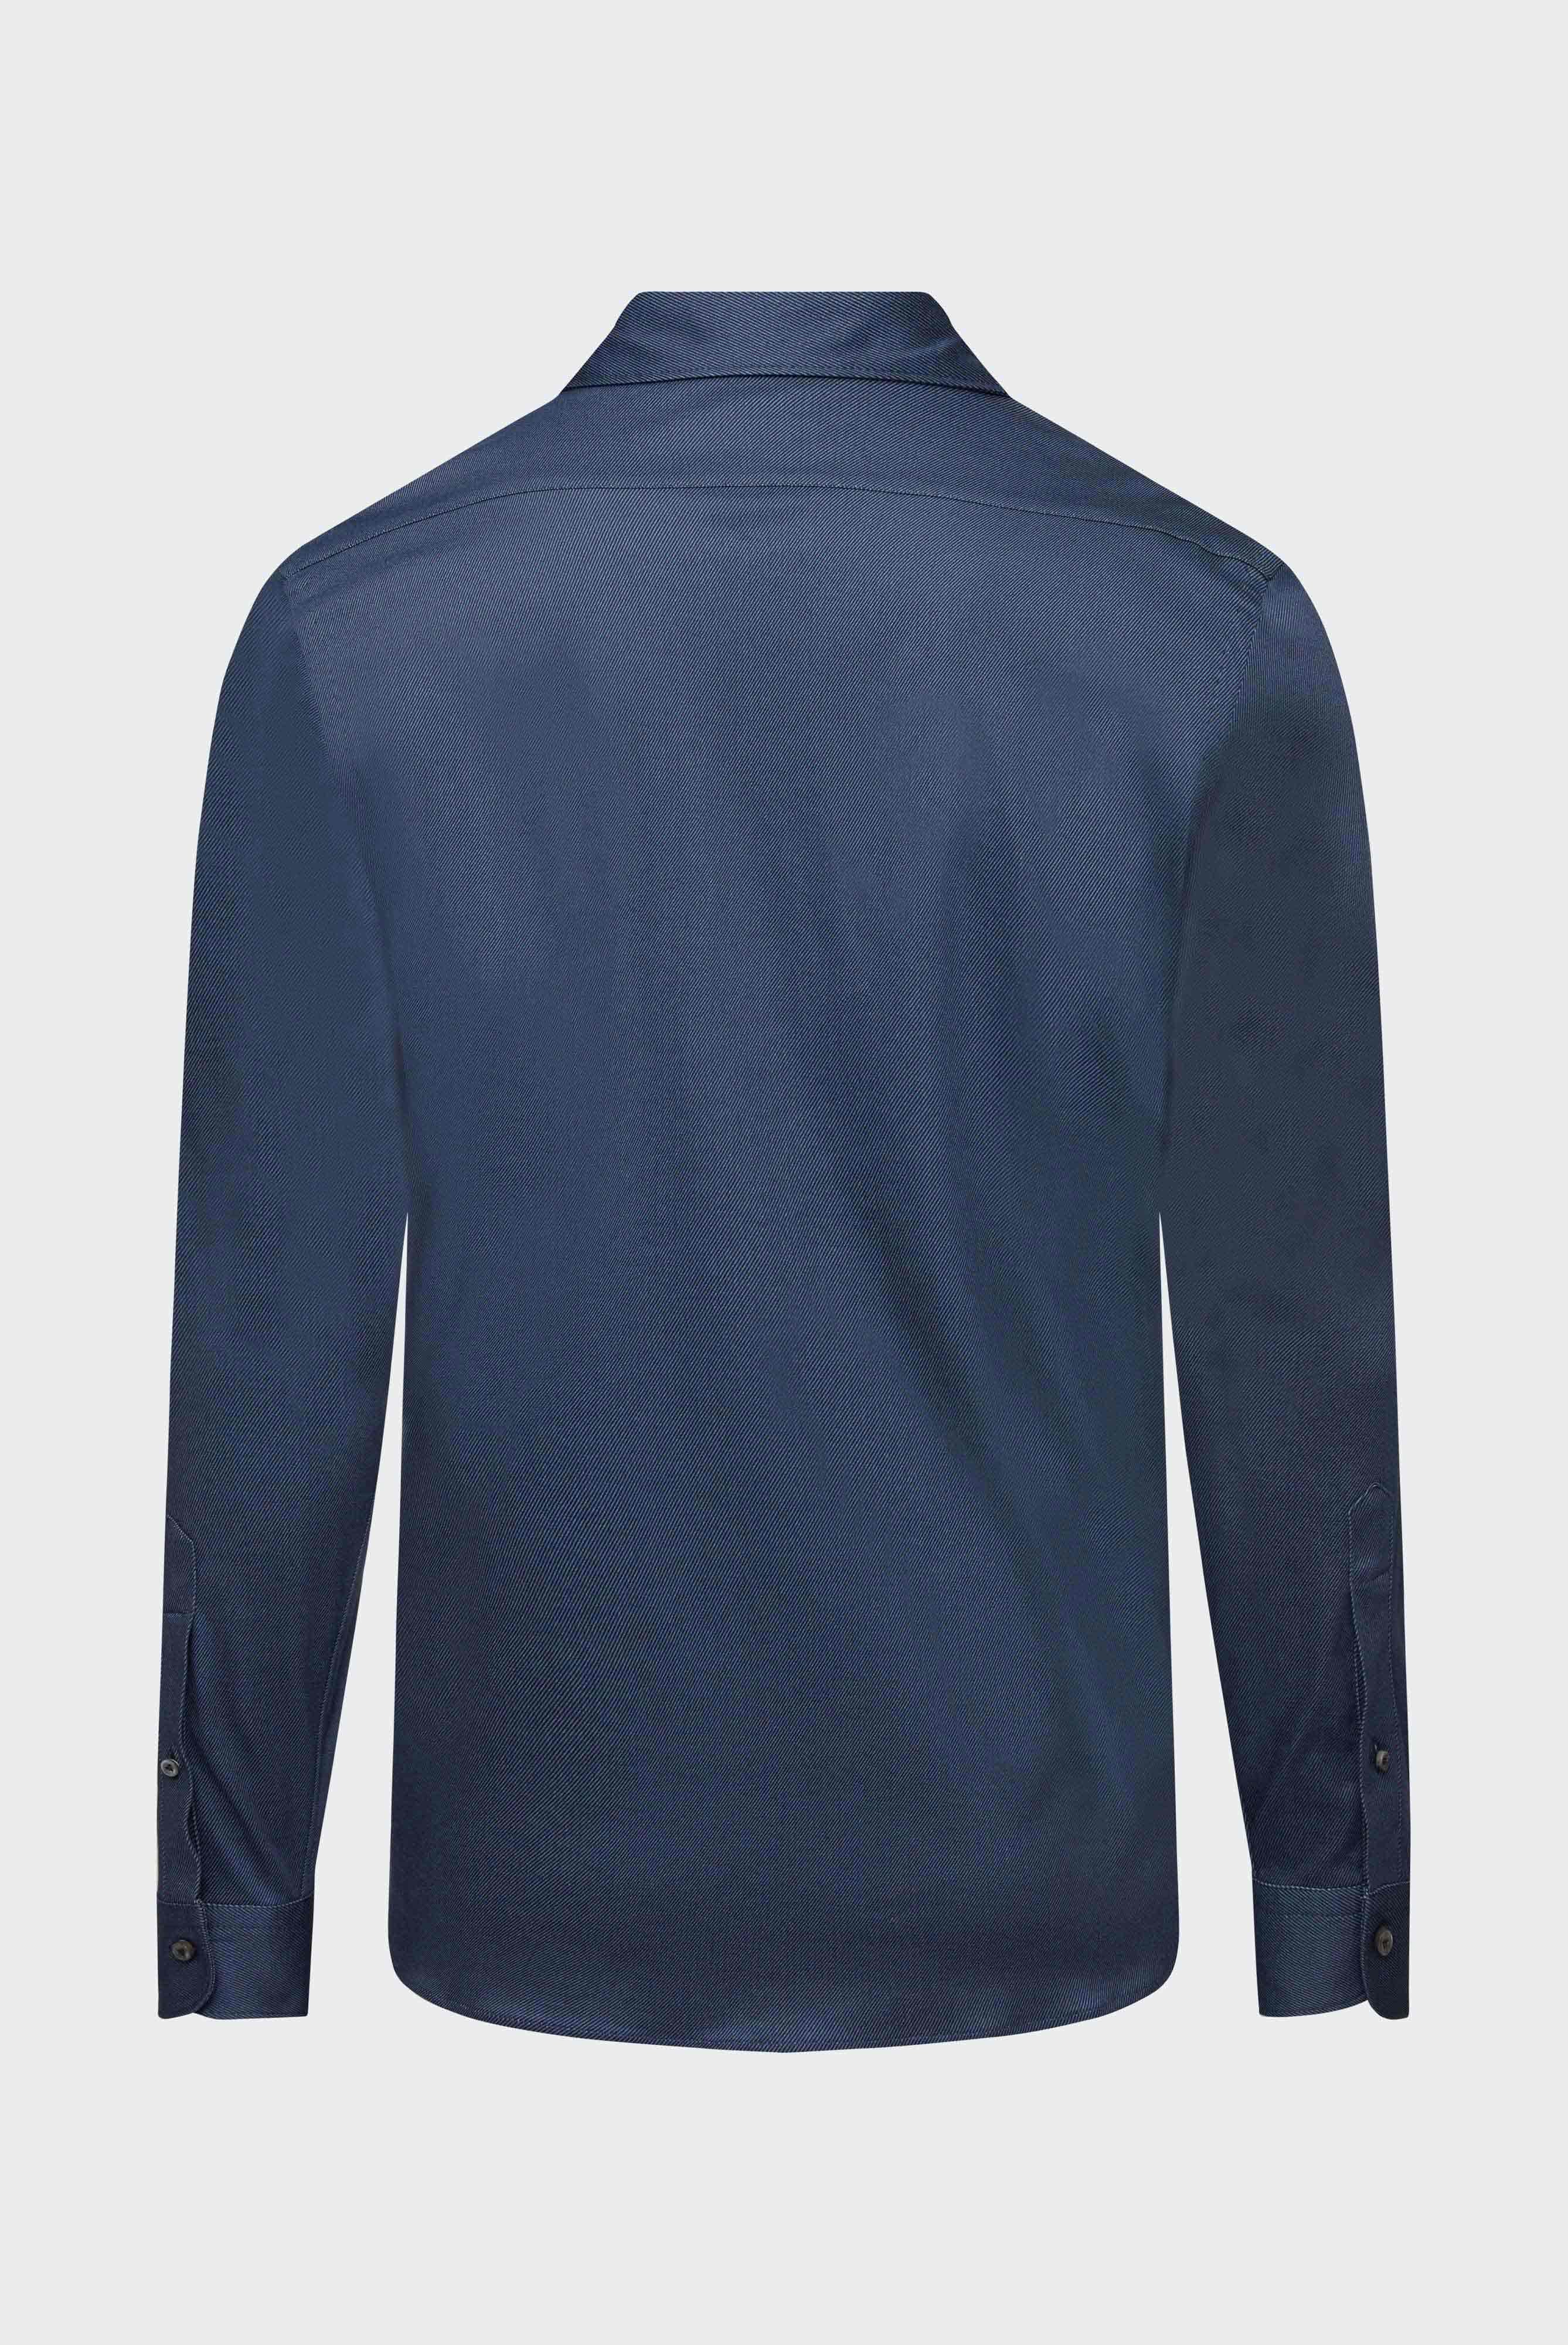 Casual Hemden+Jersey Hemd mit Twill Druck Tailor Fit+20.1683.UC.187749.782.L